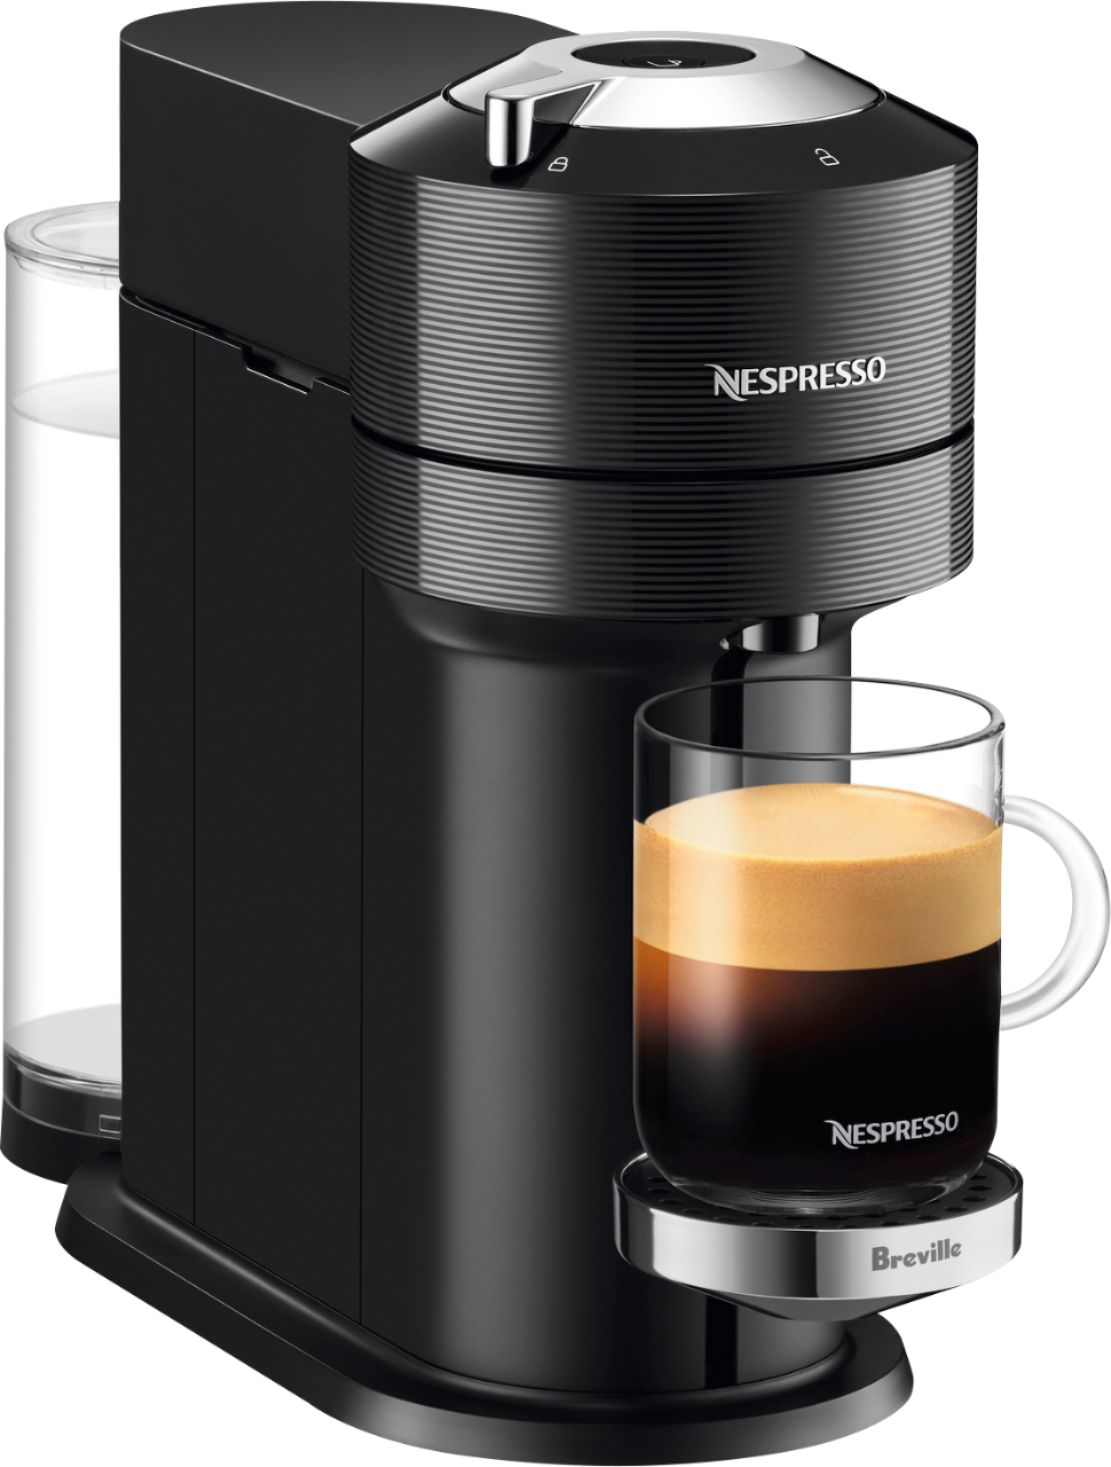 Angle View: Hamilton Beach - Espresso Machine with 15 Bars of Pressure and Milk Frother - Black